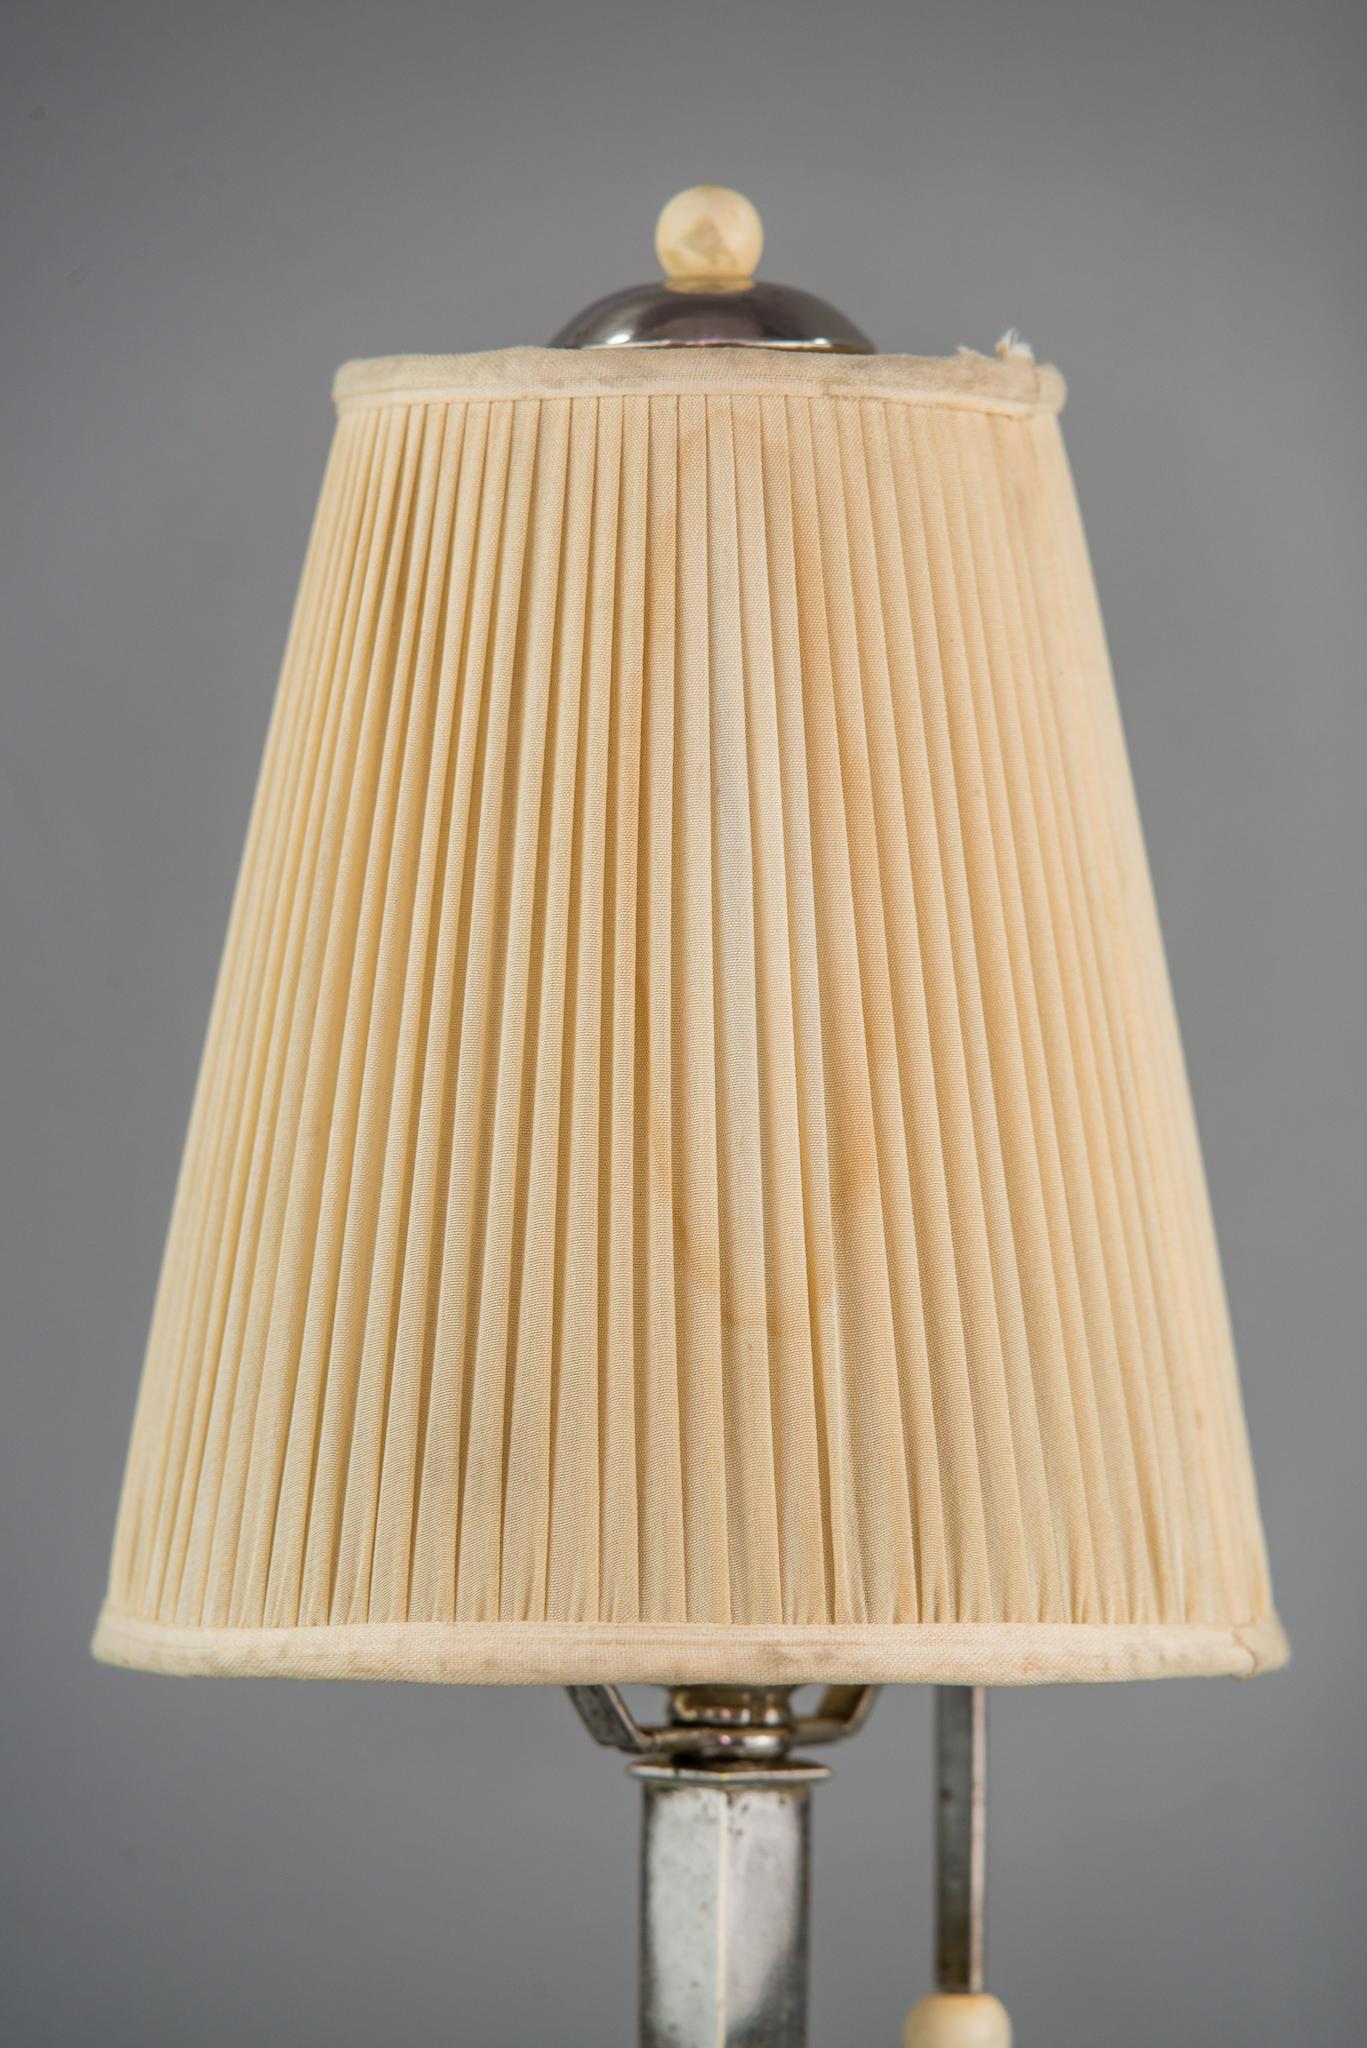 Art Deco table lamp nickel-plated with original shade, circa 1920s
Interesting design
Swiveling shade
Original condition.
 